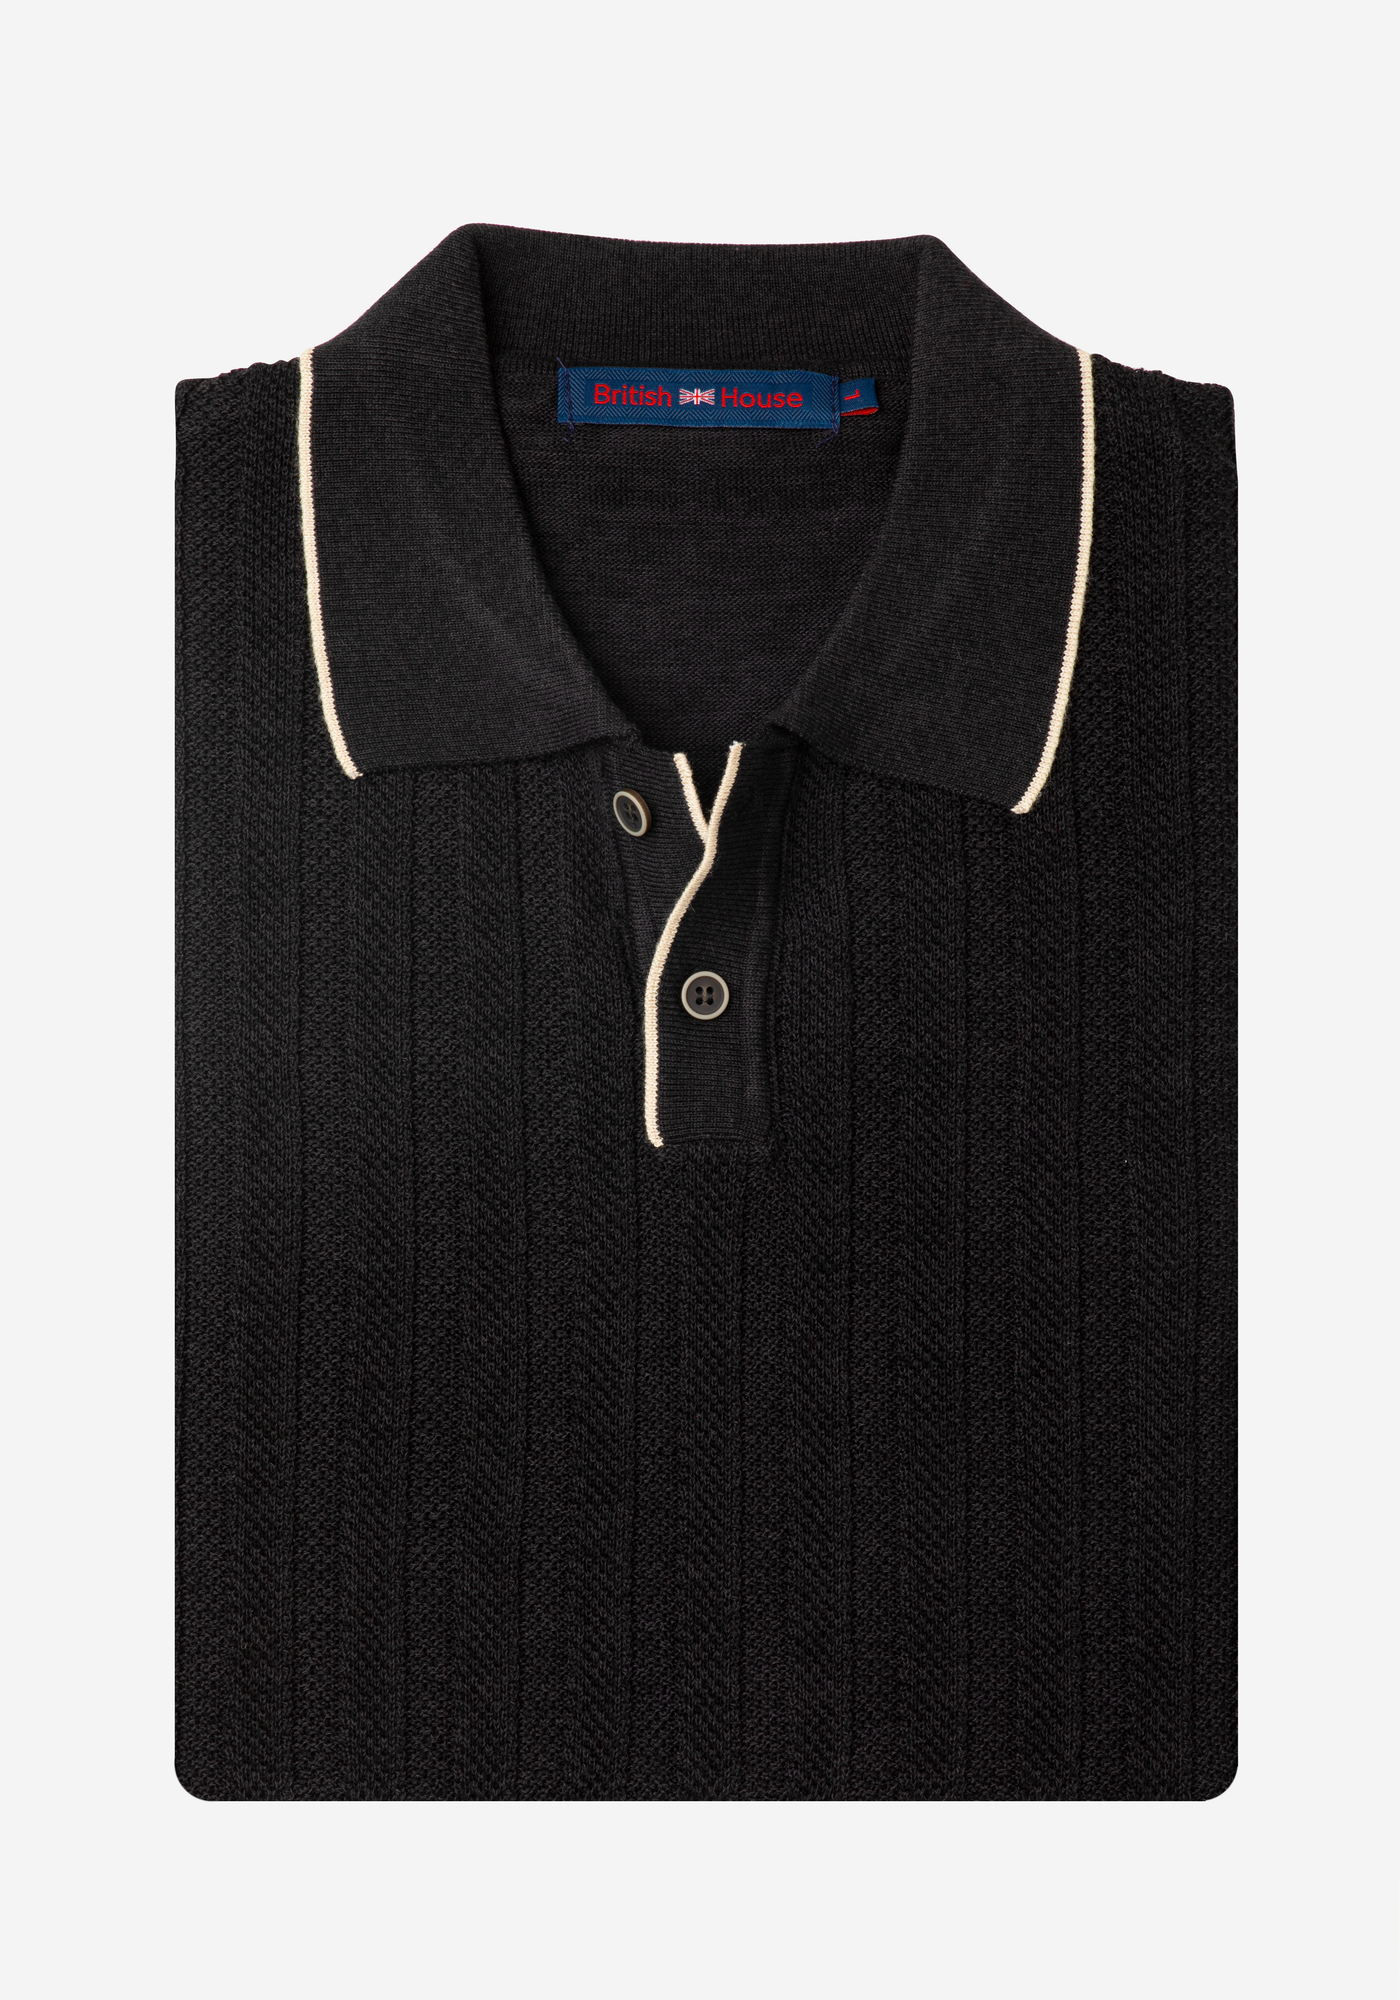 Coal Black Stripe Knitted Polo Shirt